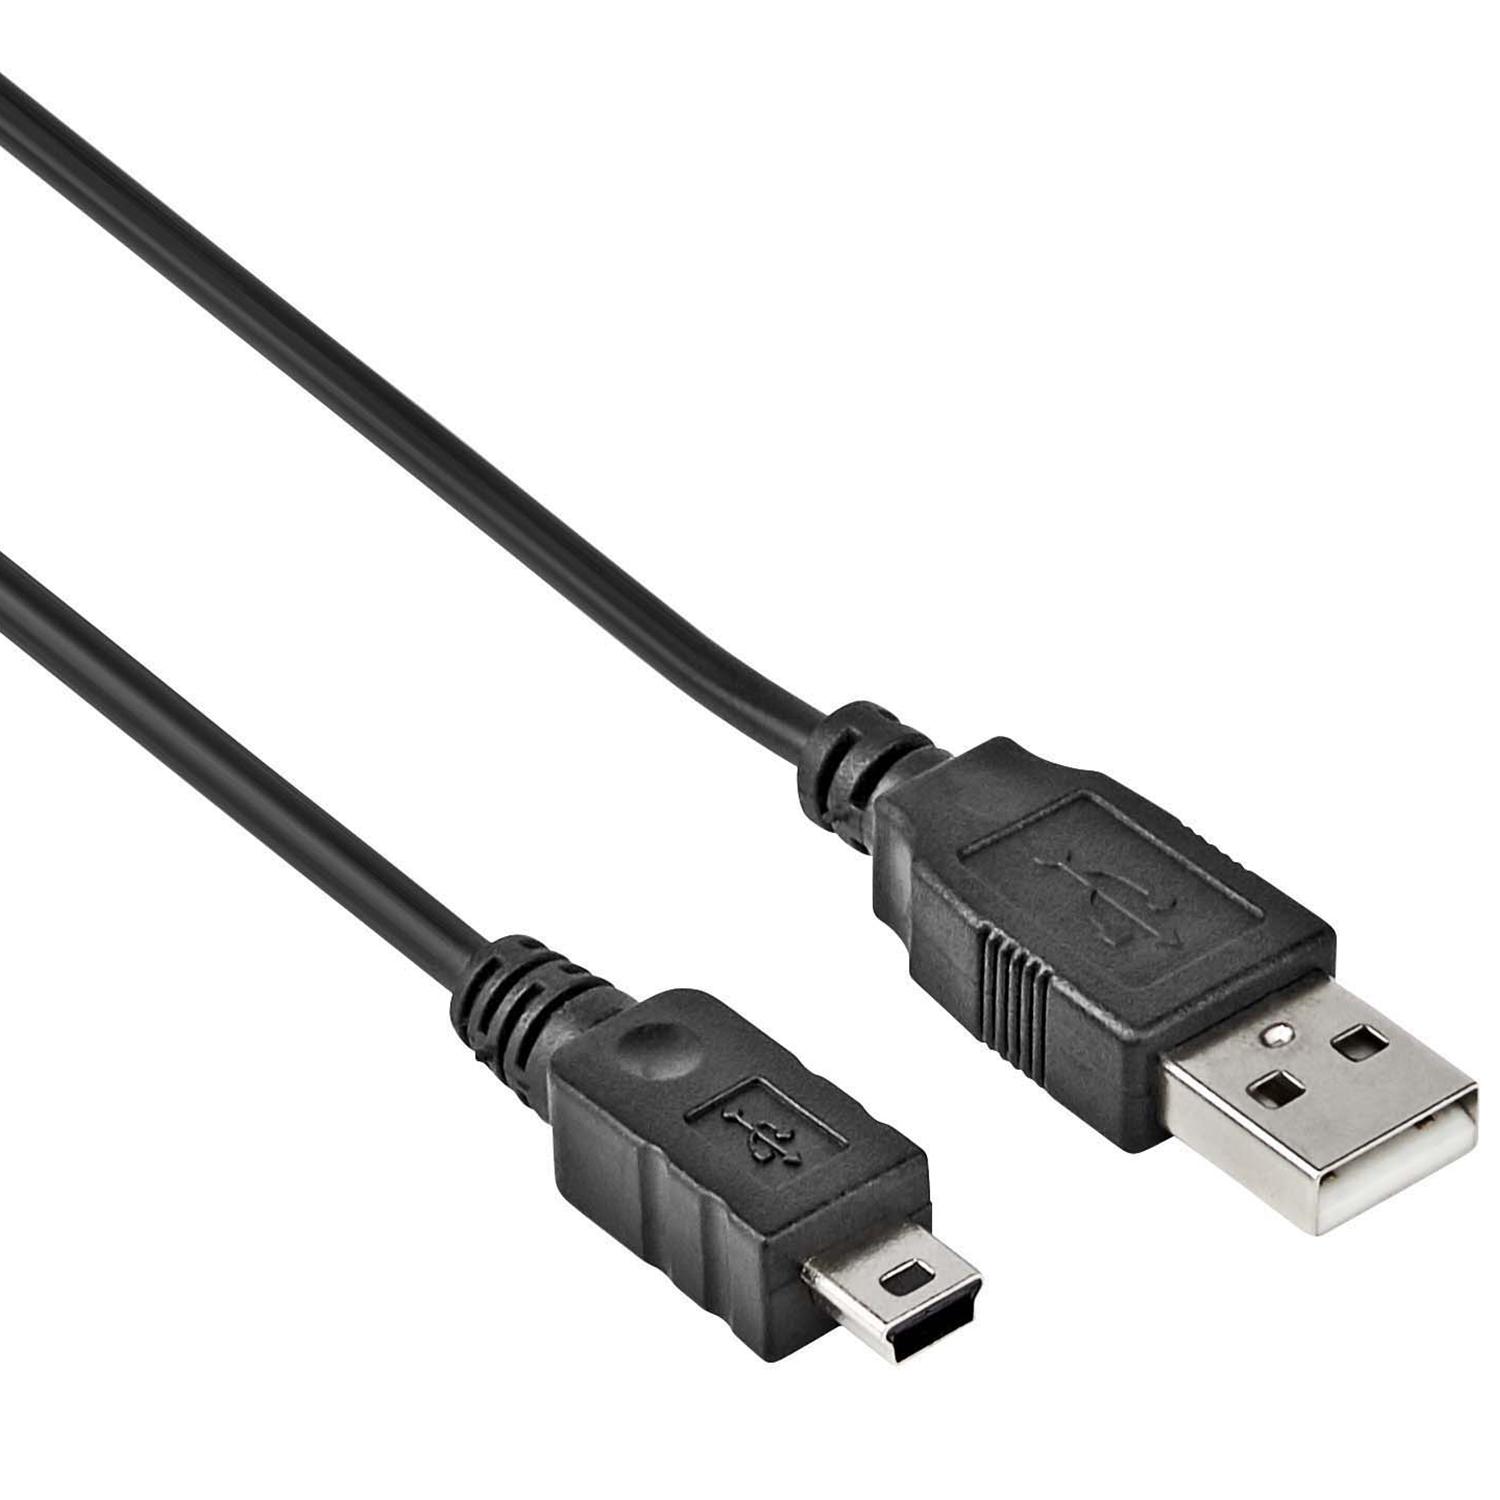 Alvast Gladys gips Mini USB Kabel - Versie: 2.0 - HighSpeed, Aansluiting 1: USB A male,  Aansluiting 2: Mini USB male, Lengte: 1 meter.